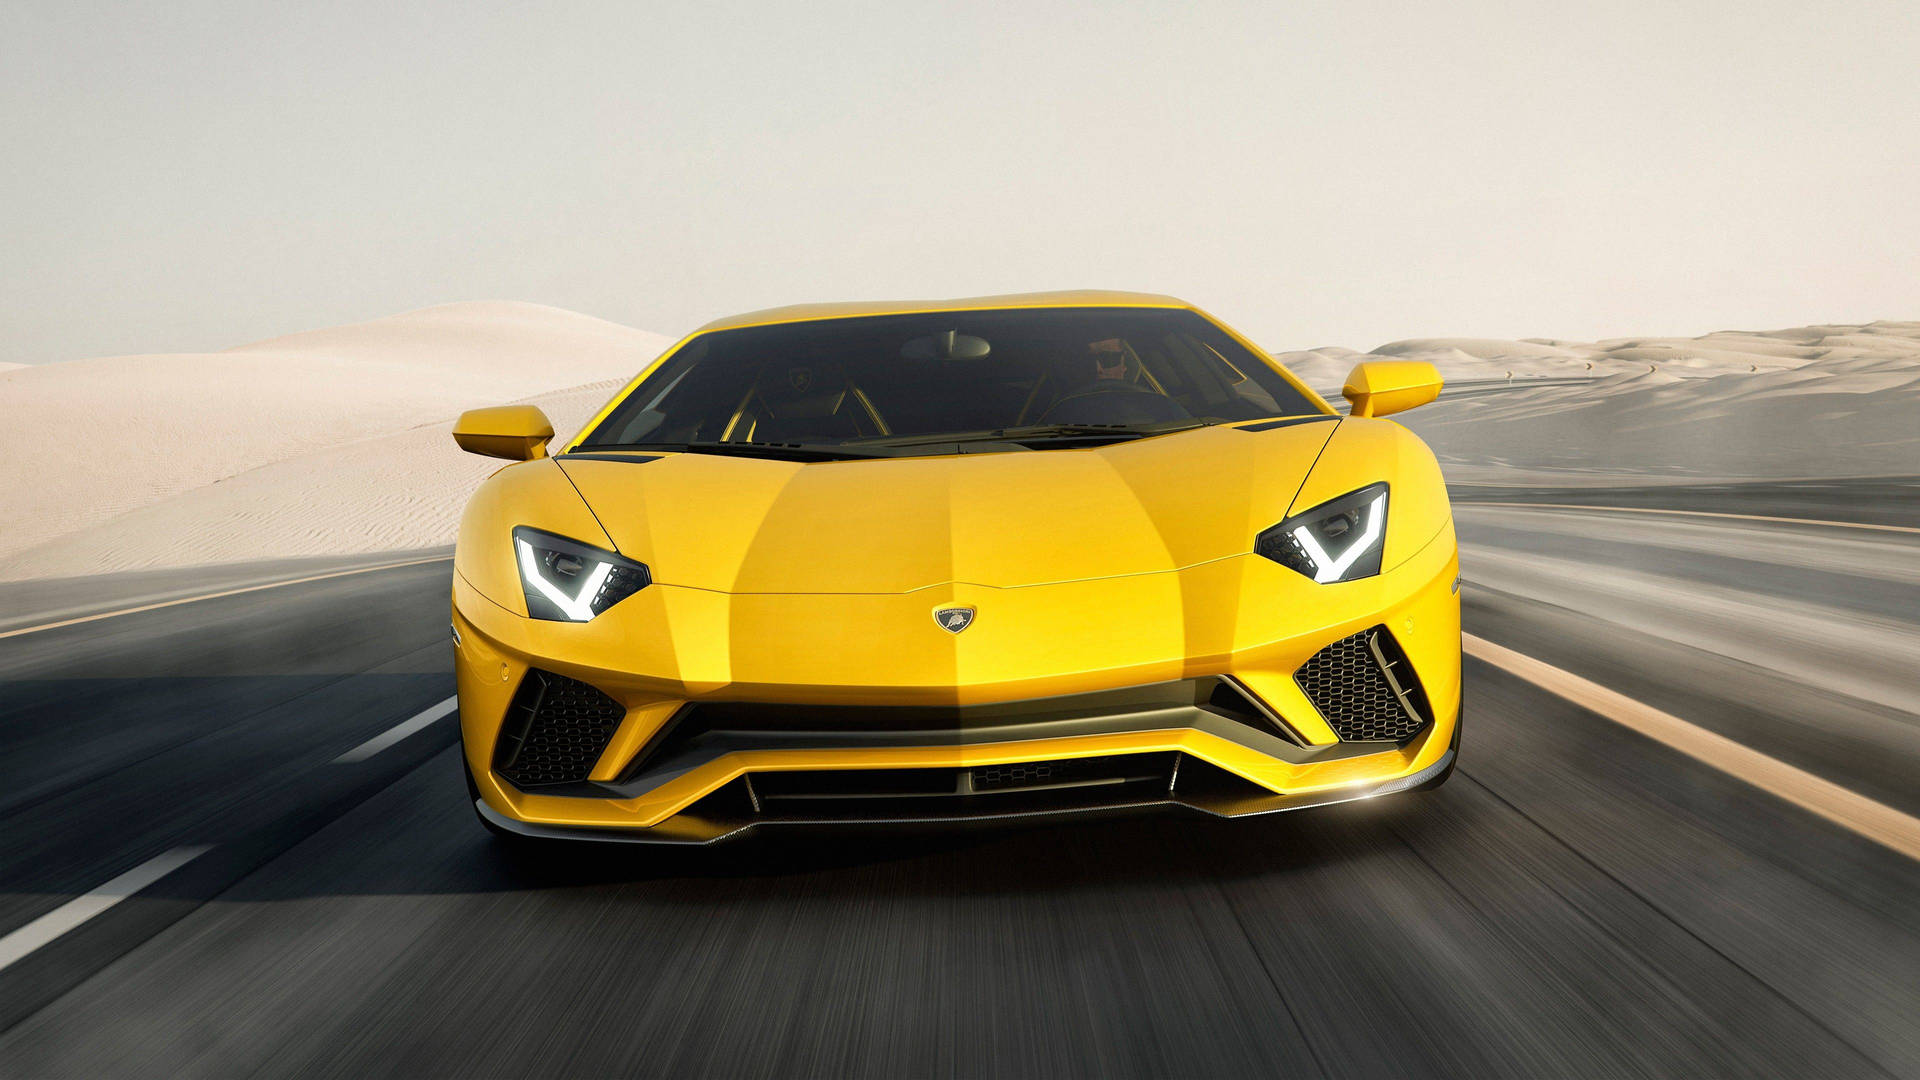 Cool Cars: Speeding Yellow Lamborghini Wallpaper